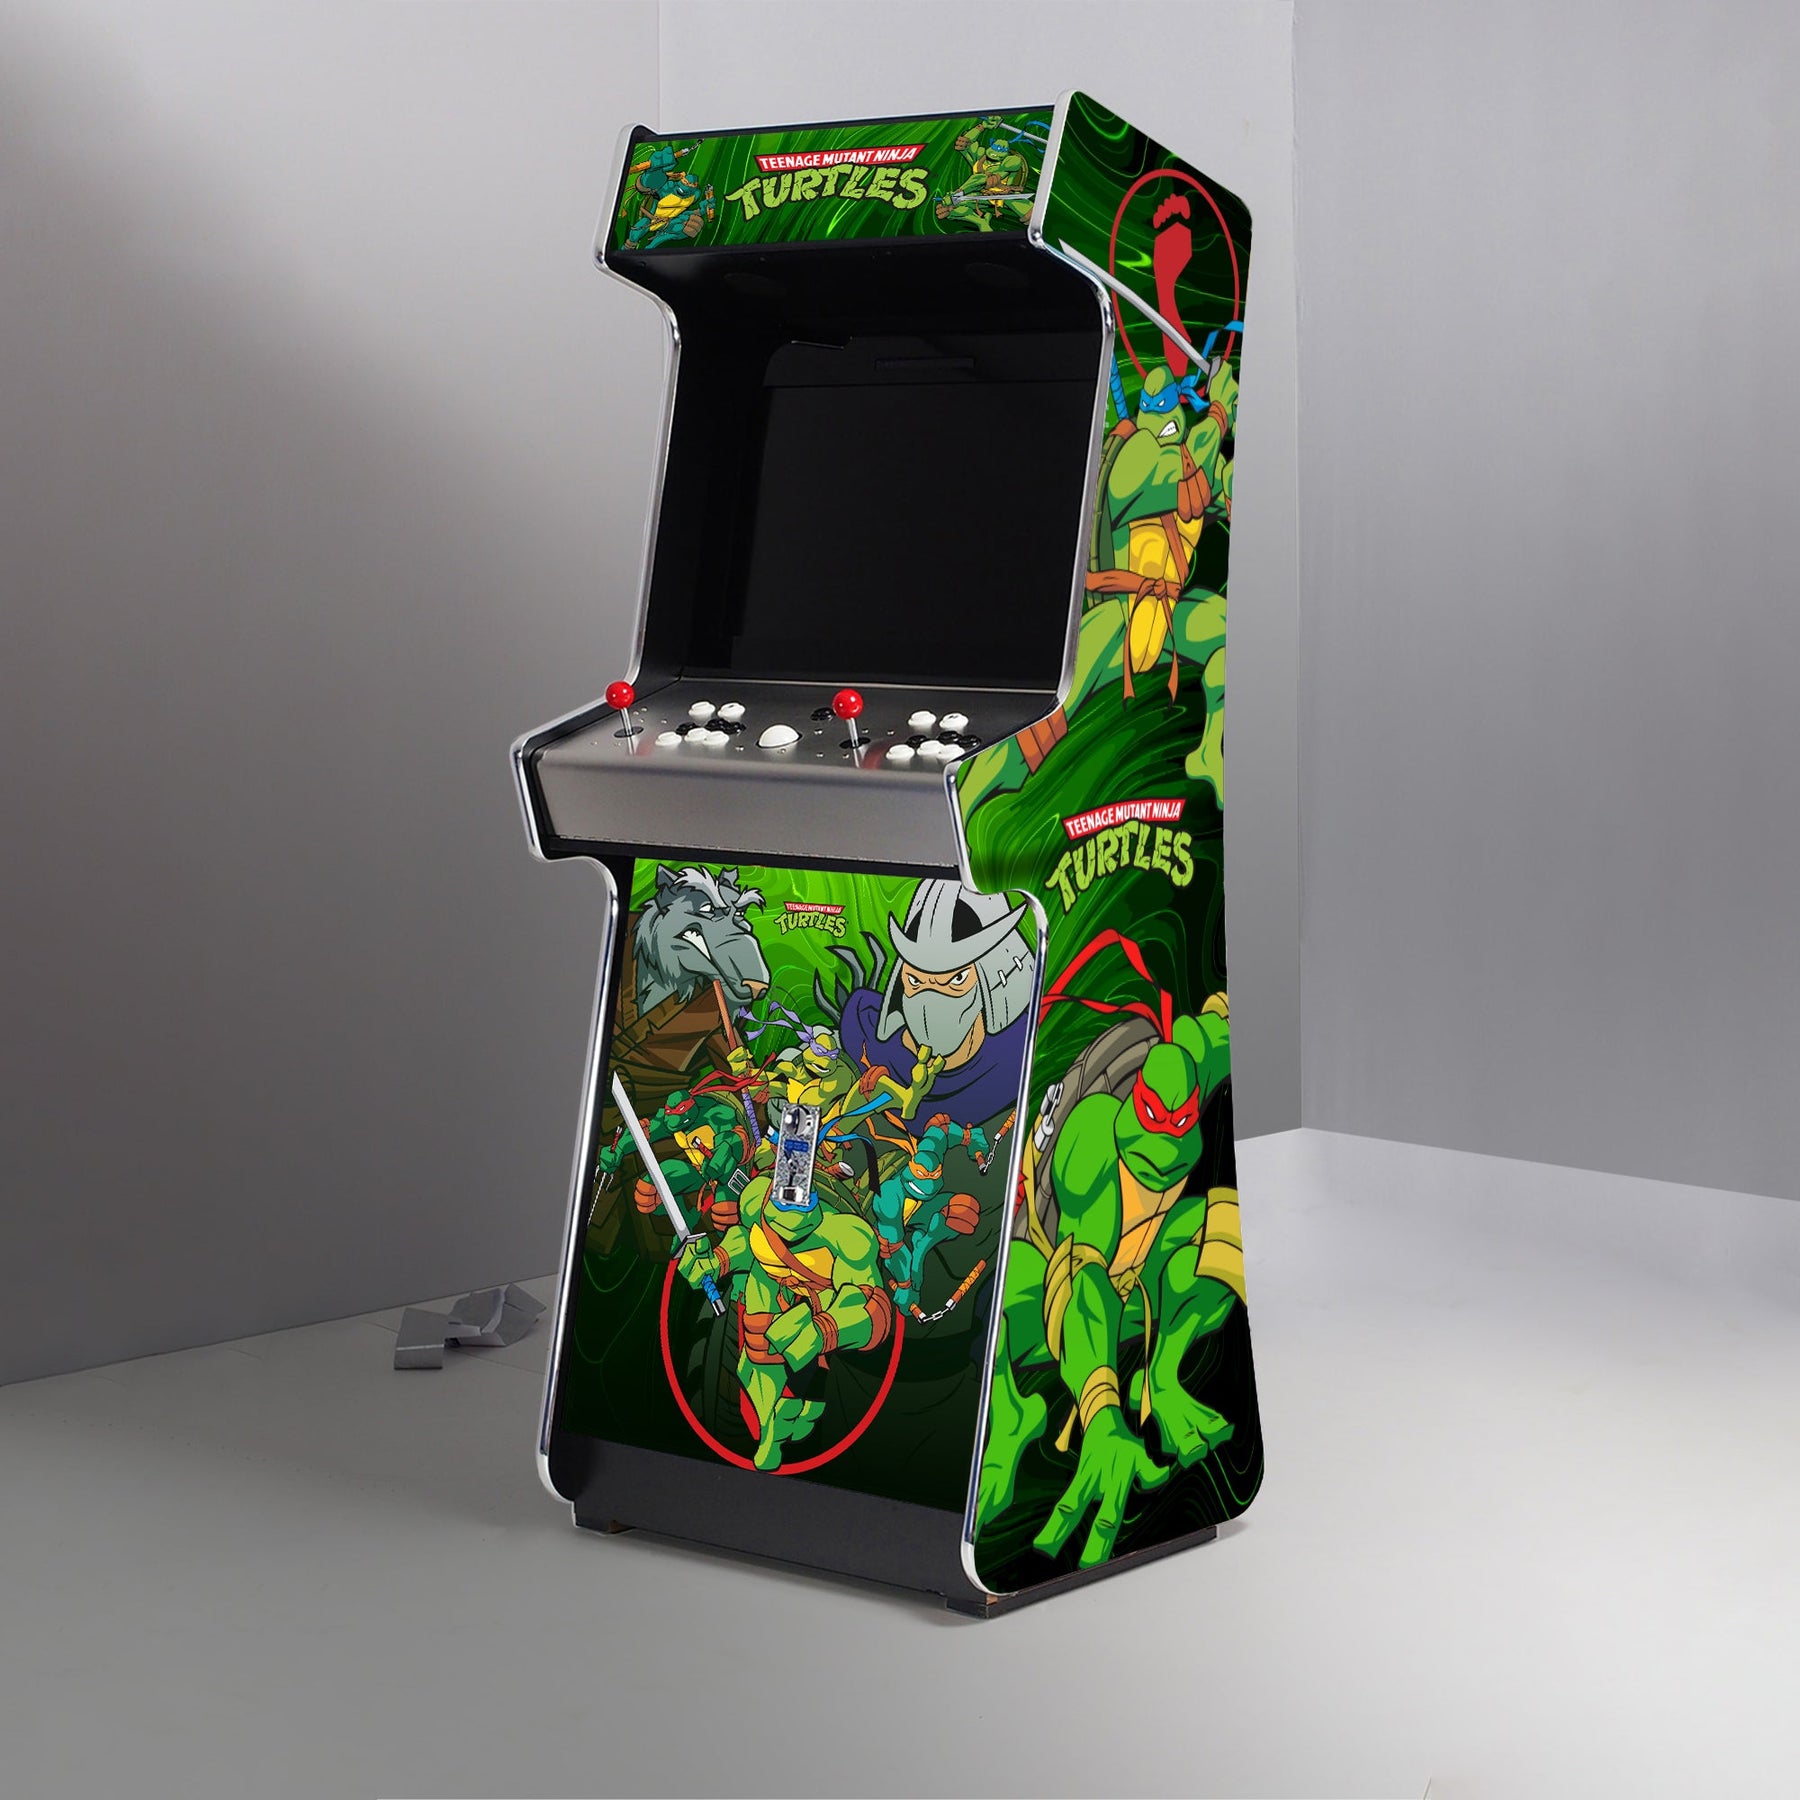 Upright Arcade Machine - TMNT Arcade Machine - Platinum